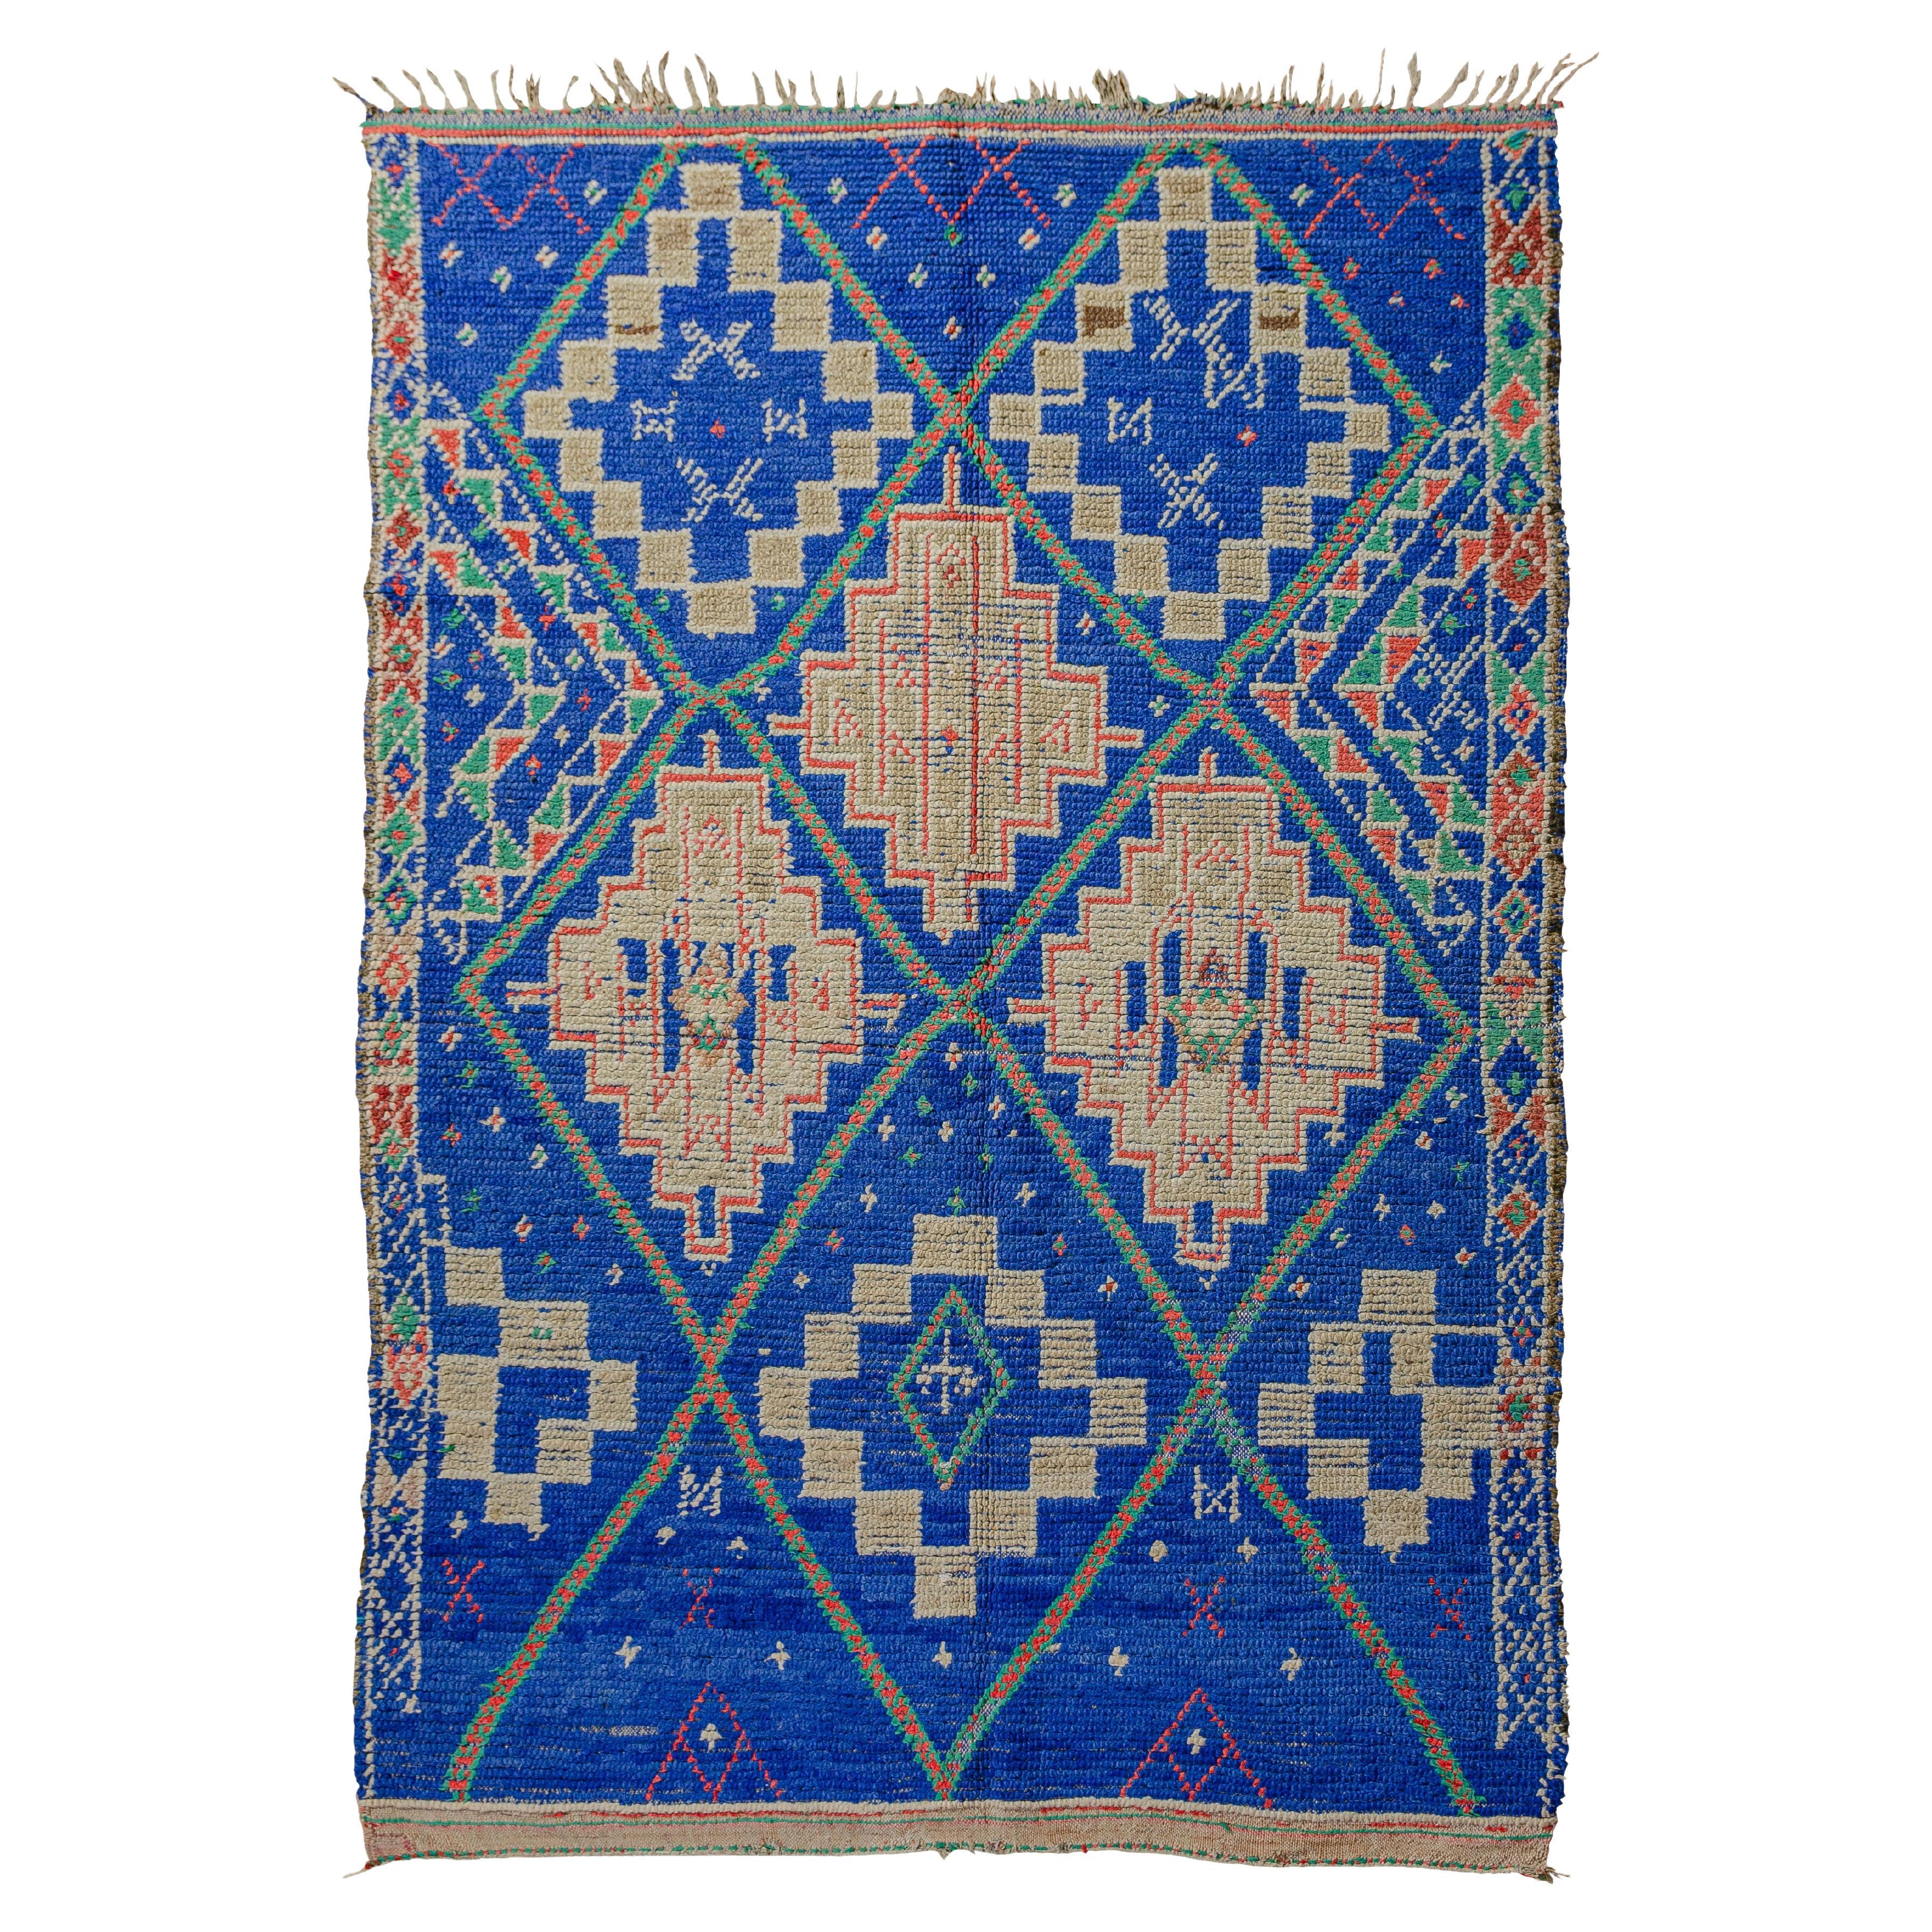 An impactful vintage cobalt Beni M’Guild rug curated by Breuckelen Berber